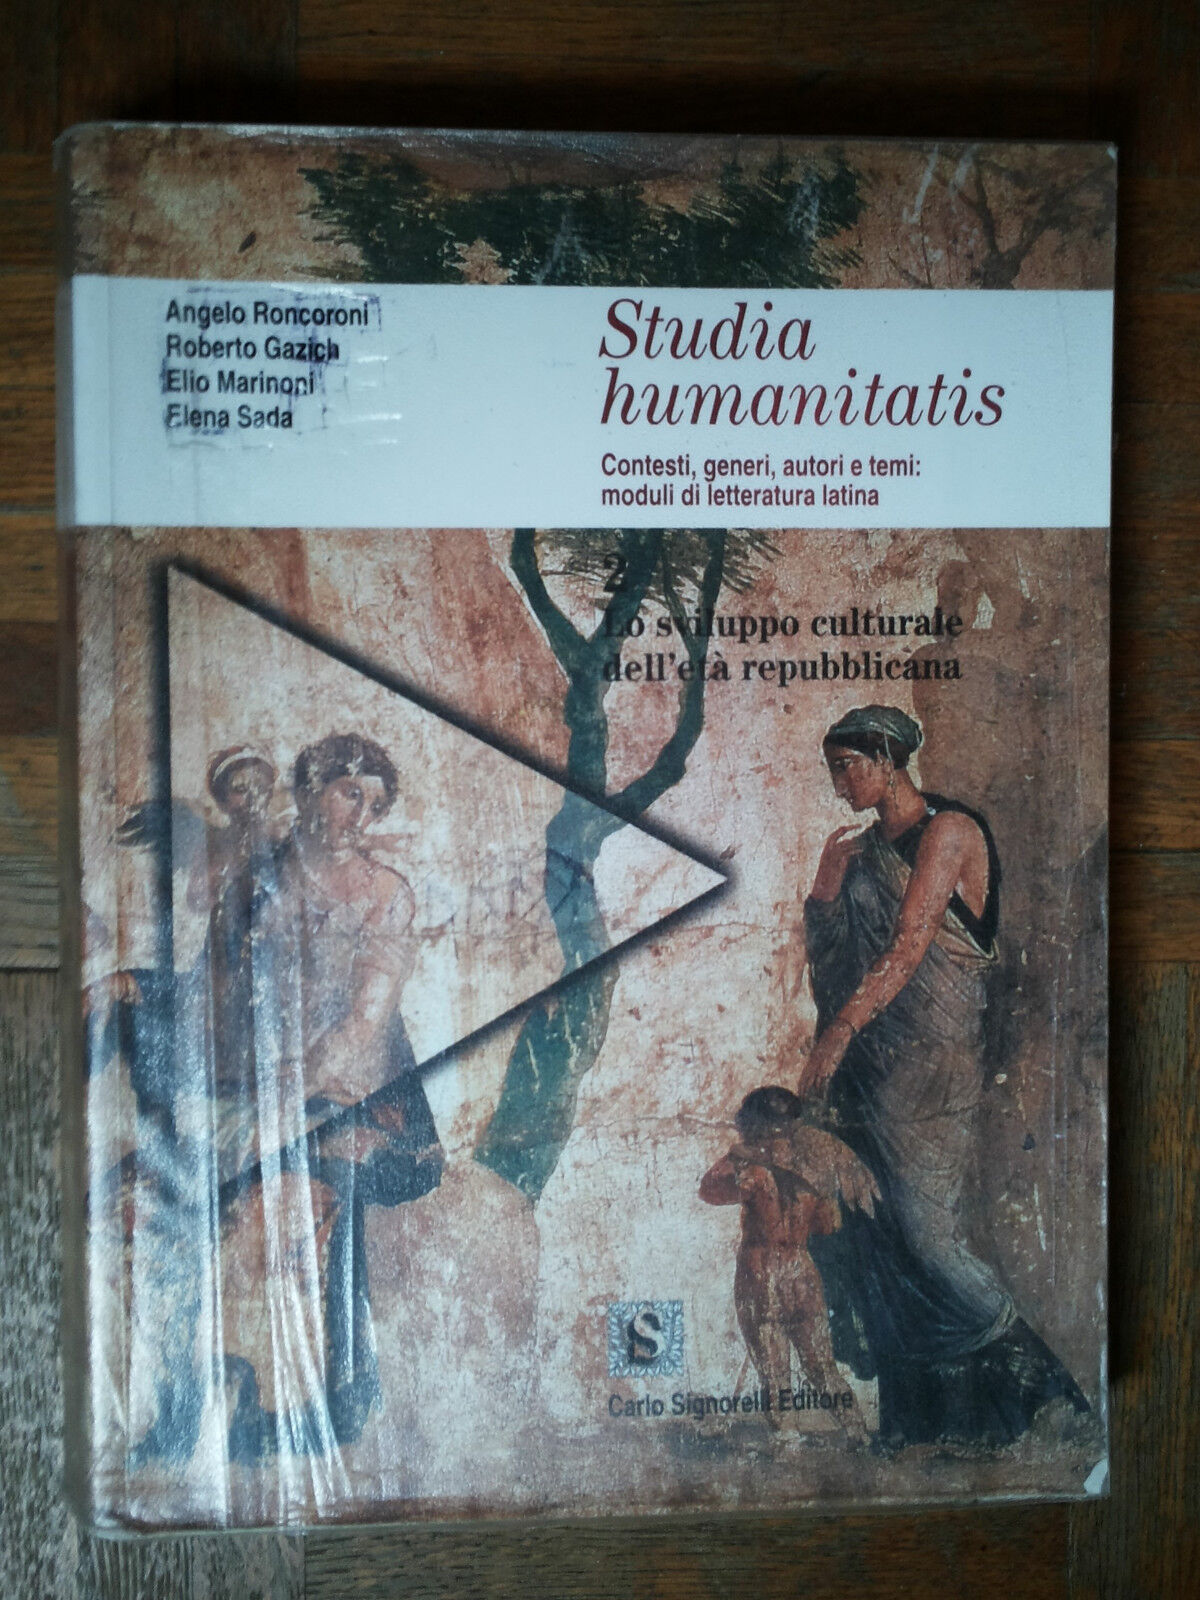 Studia humanitatis Vol. 2 - AA.VV. - Carlo Signorelli editore,2009 - R